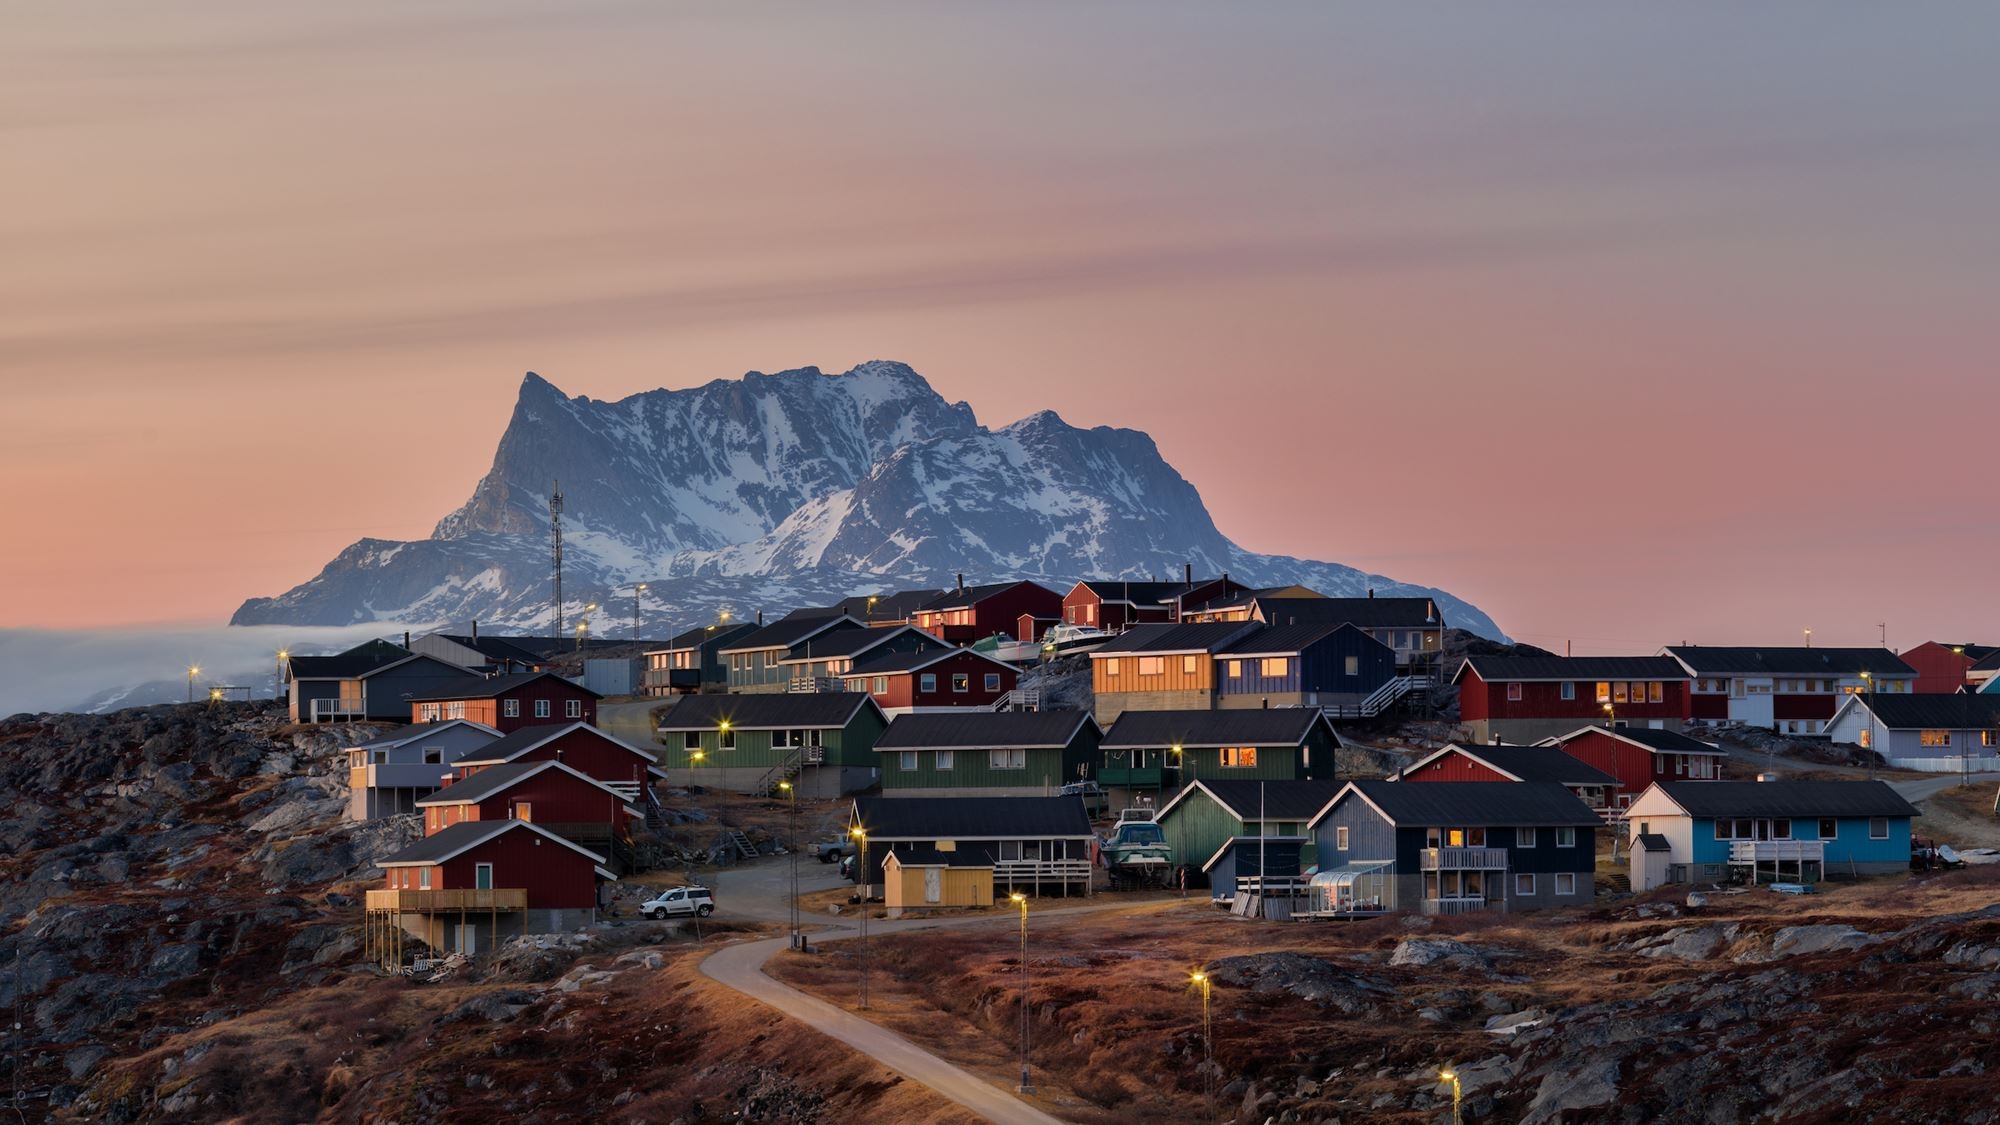 Nuuk Greenland travels, Kurzreise nach Nuuk, Wainando, Nature photography, 2000x1130 HD Desktop